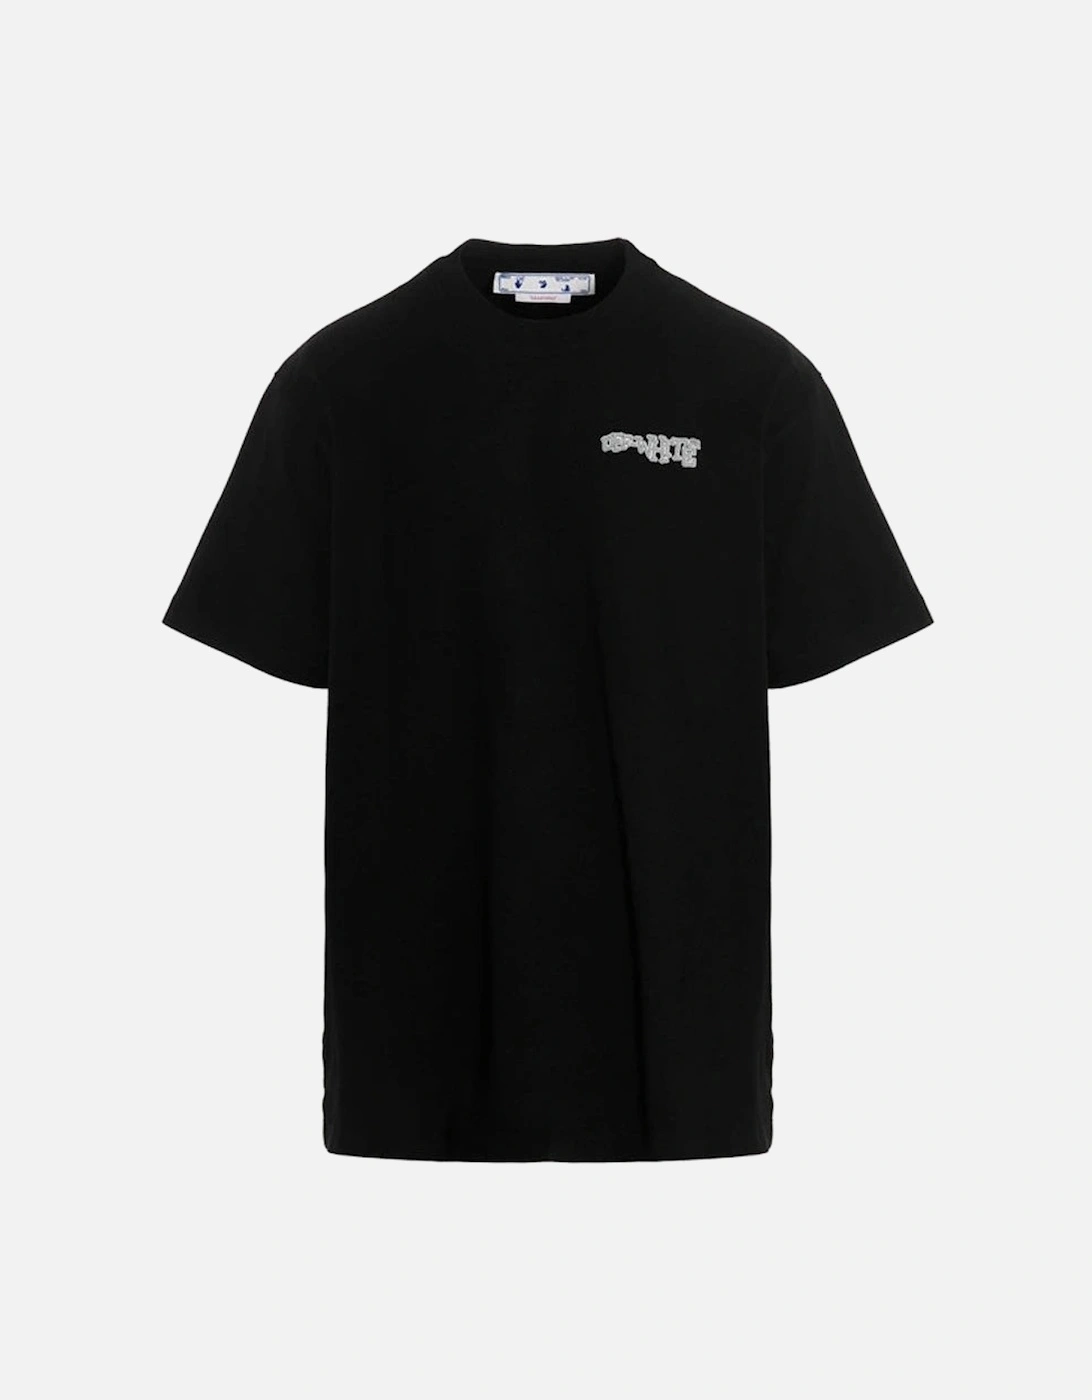 Carlos Arrow Printed Oversized T-Shirt in Black